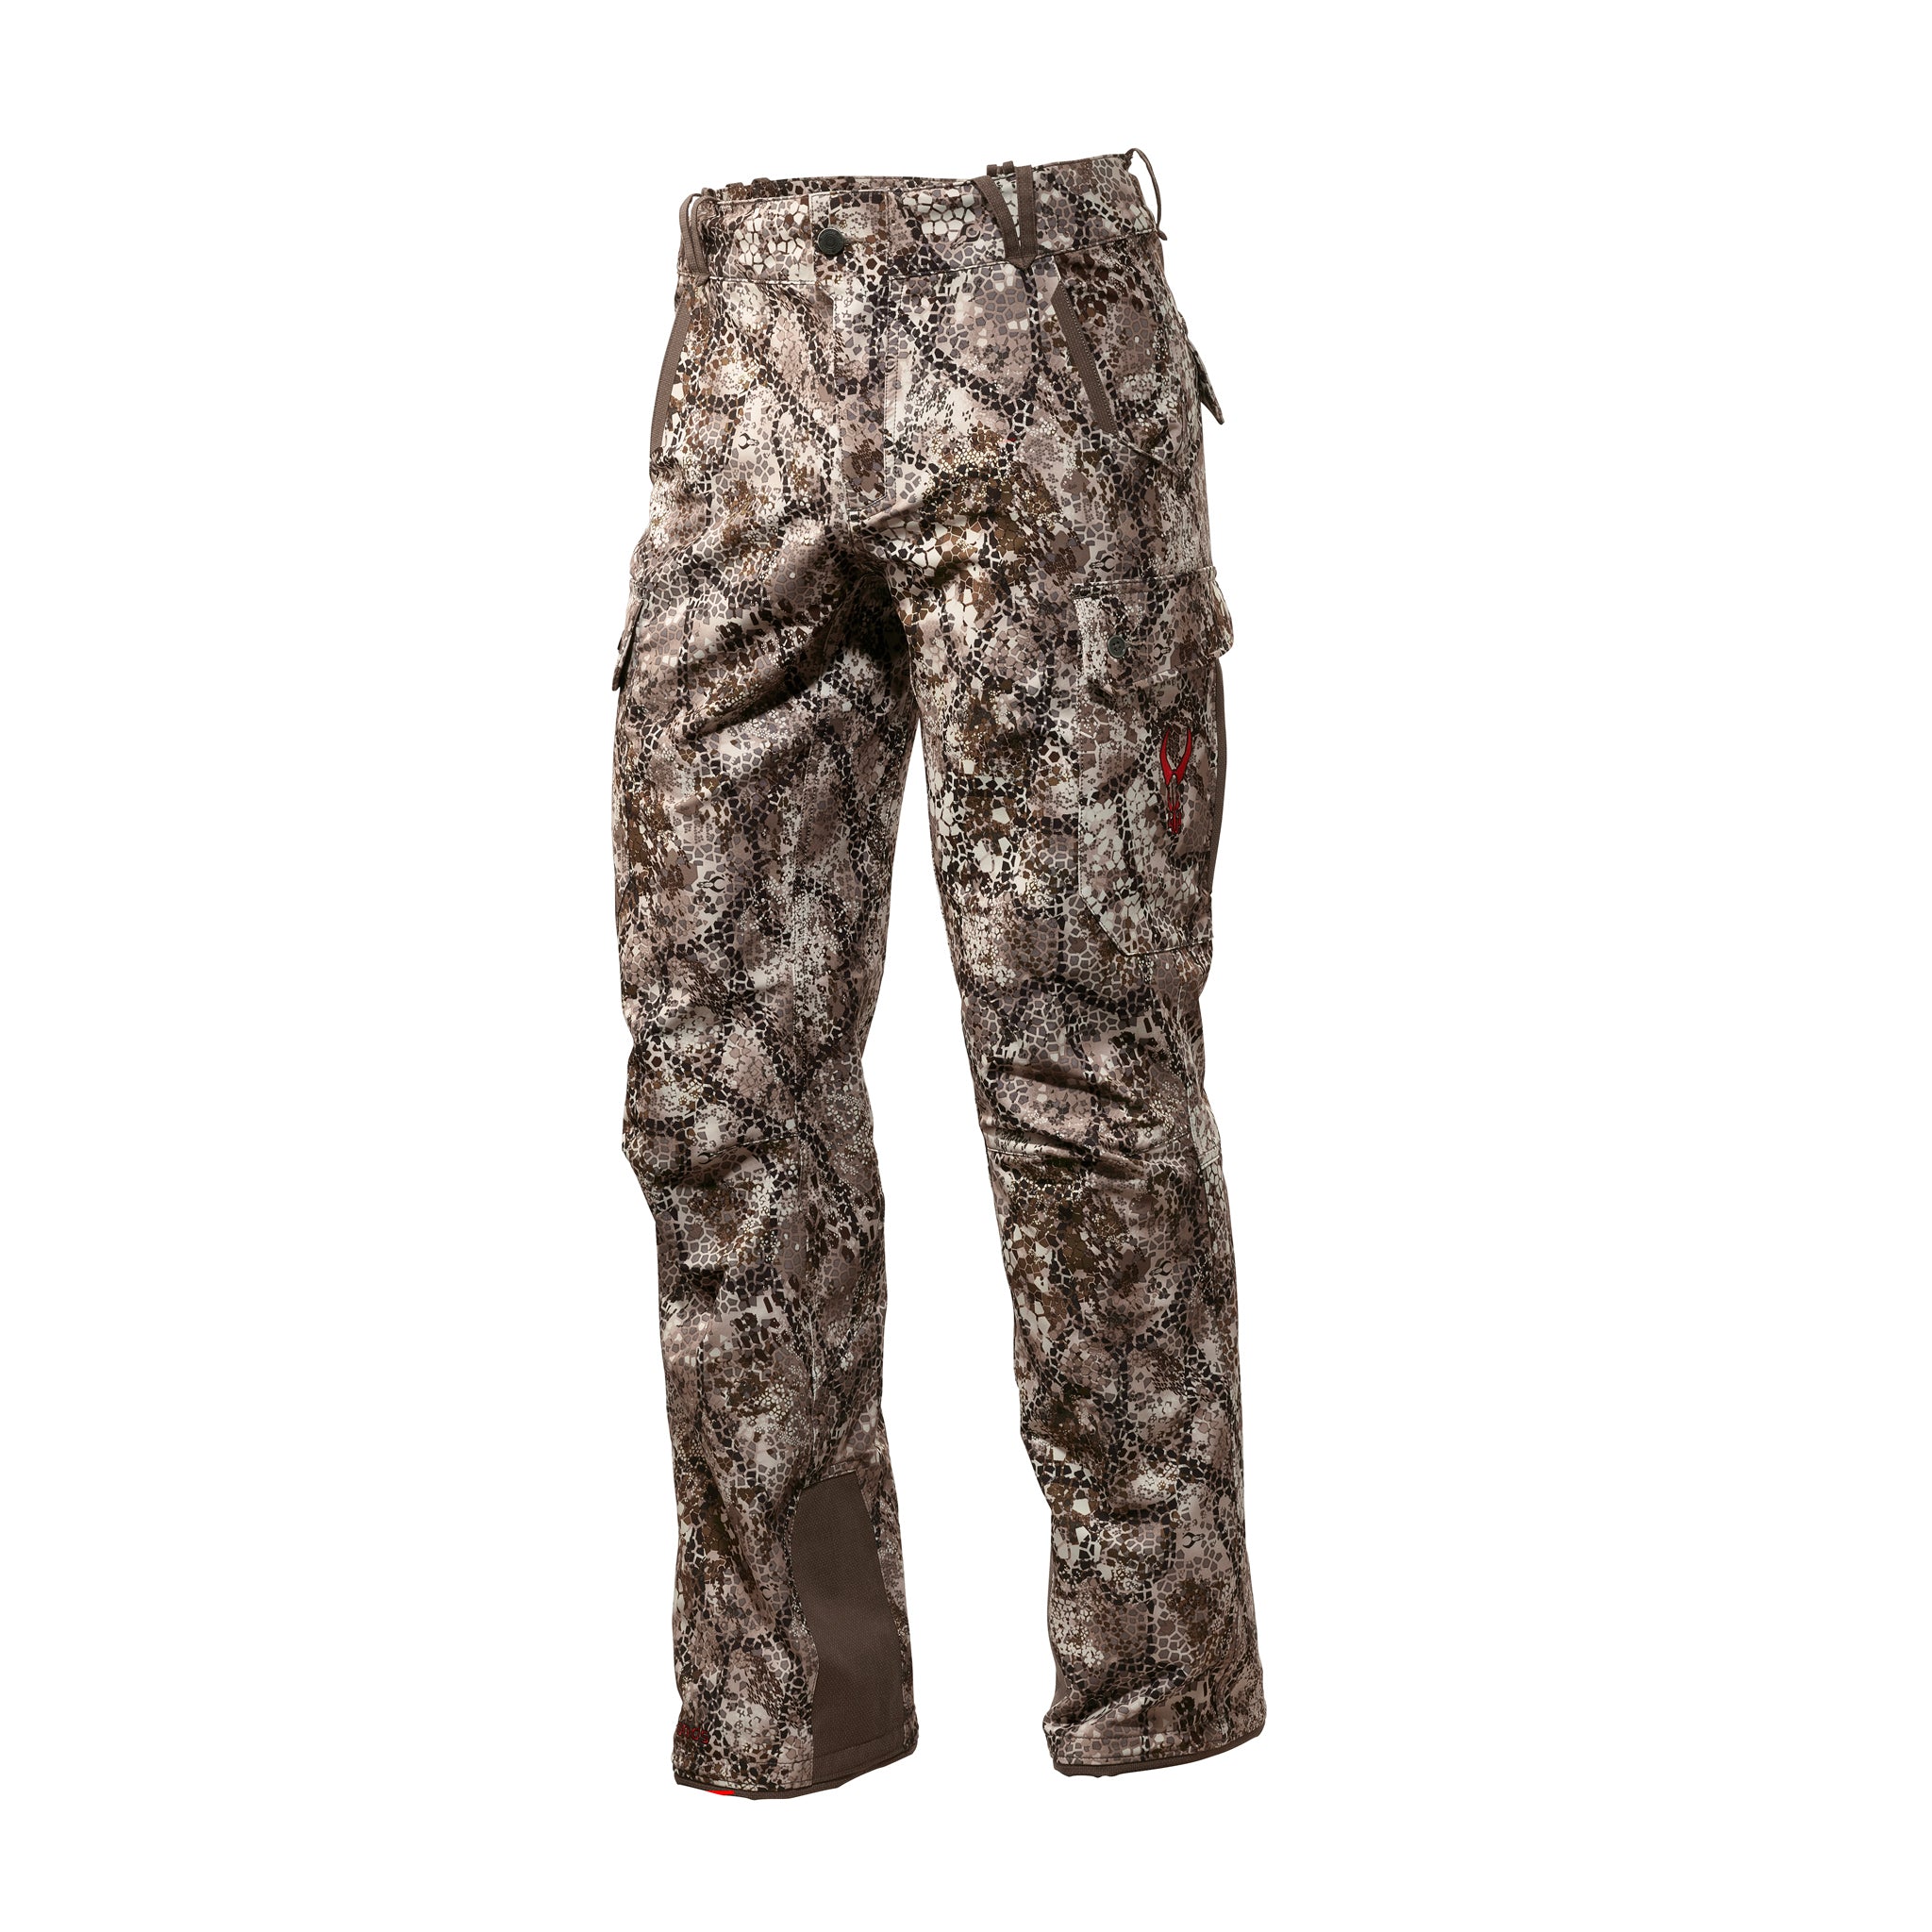 Cabela's Men's Goretex Hunting Pants w/ Suspenders - 2XL | Hunting pants,  Gore tex, Suspenders